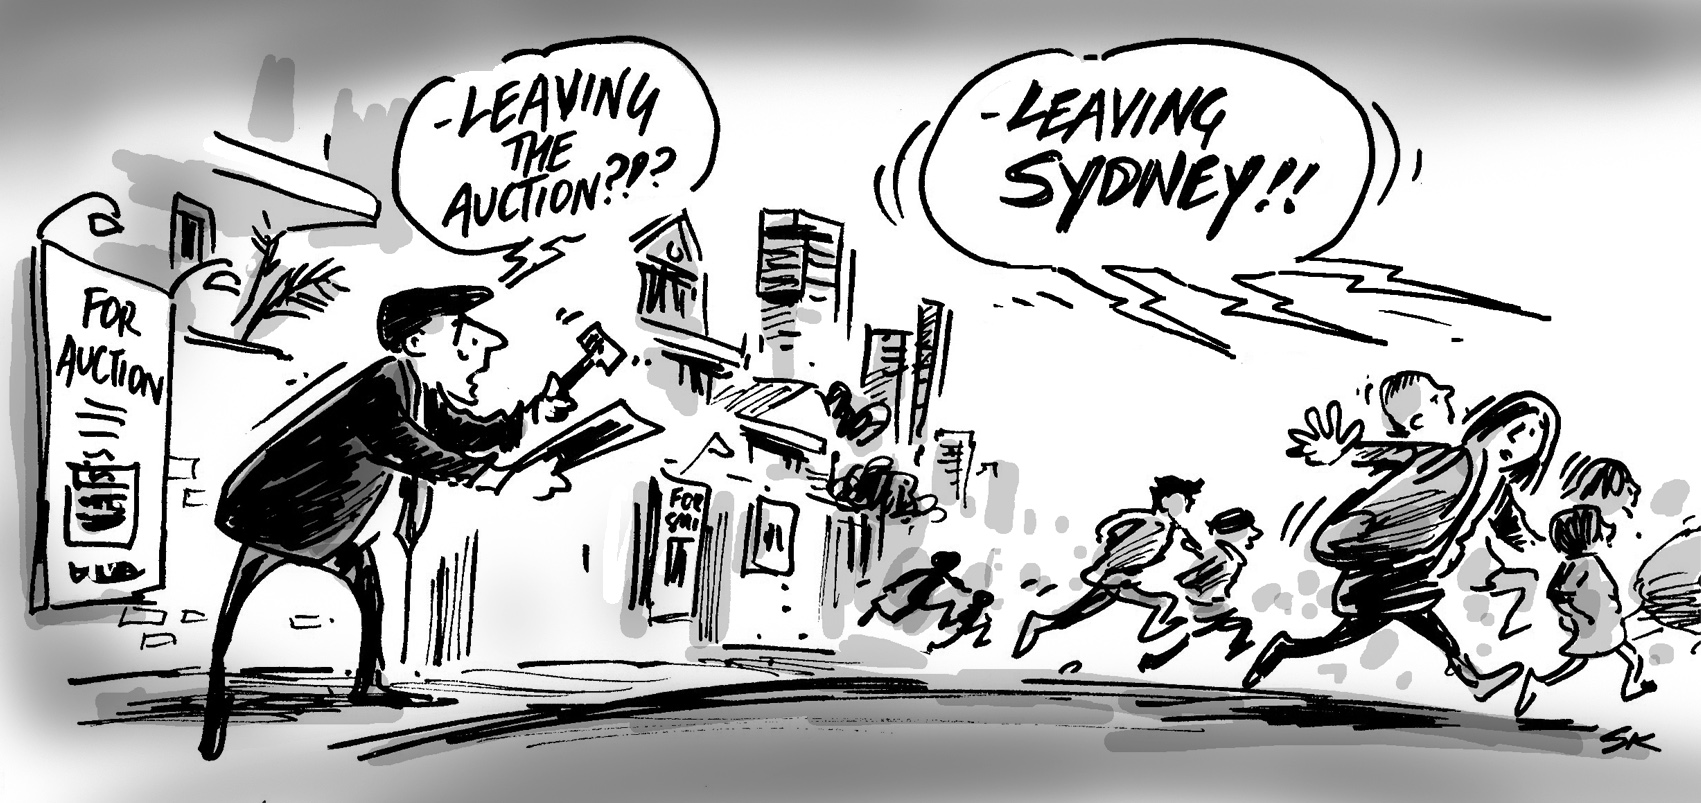 What’s driving Sydney’s population exodus?